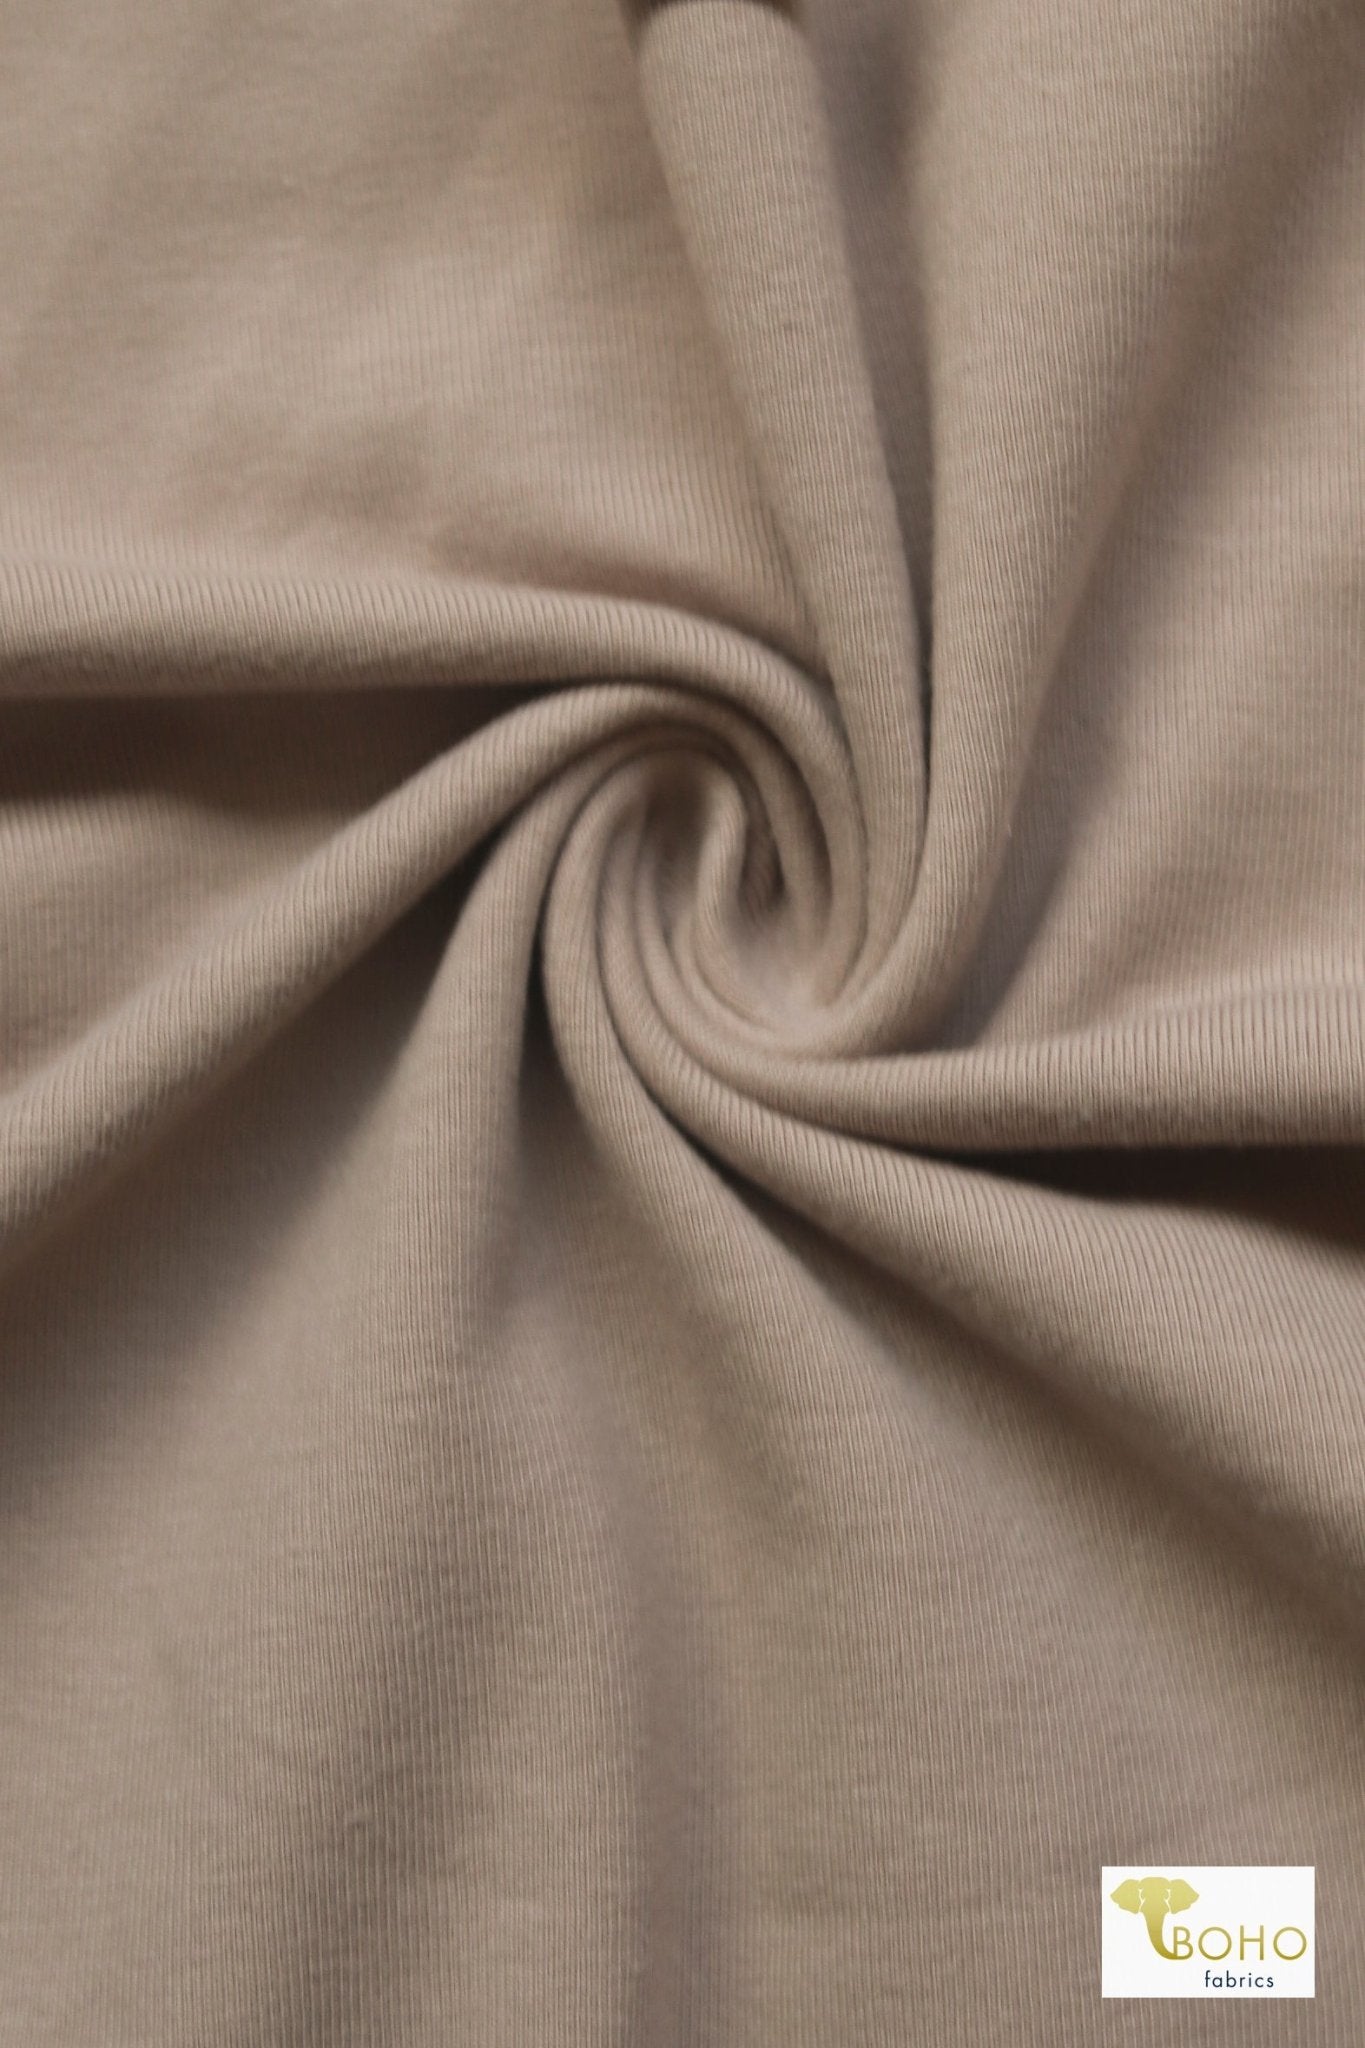 Warm Stone, Solid Cotton Spandex Knit Fabric, 9 oz. - Boho Fabrics